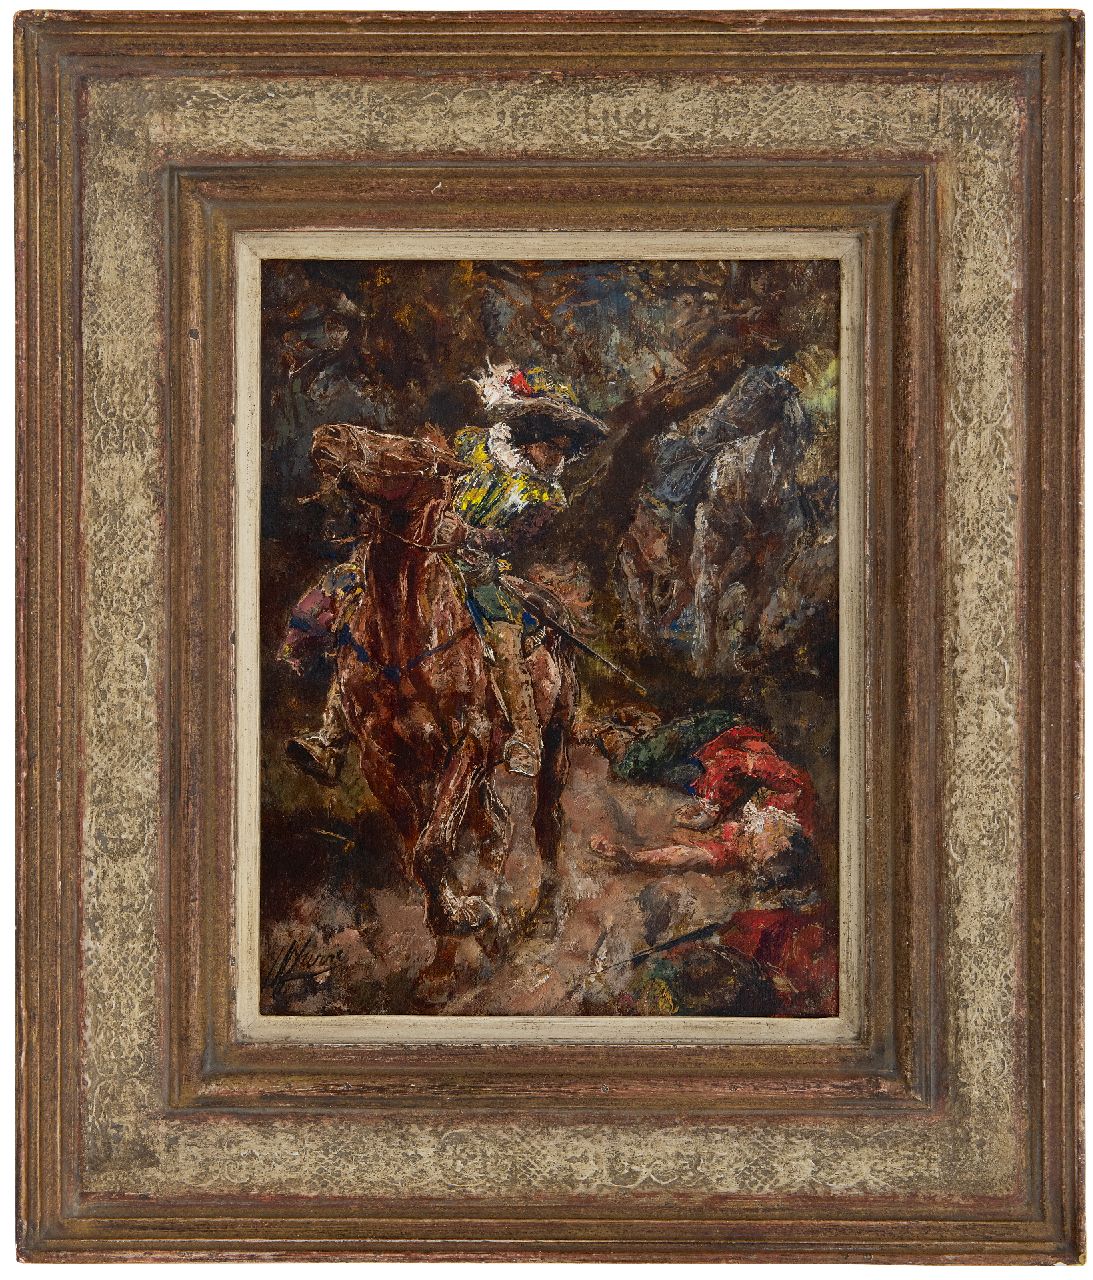 Jurres J.H.  | Johannes Hendricus Jurres, A scene from Gil Blas, oil on panel 28.4 x 22.0 cm, signed l.l.